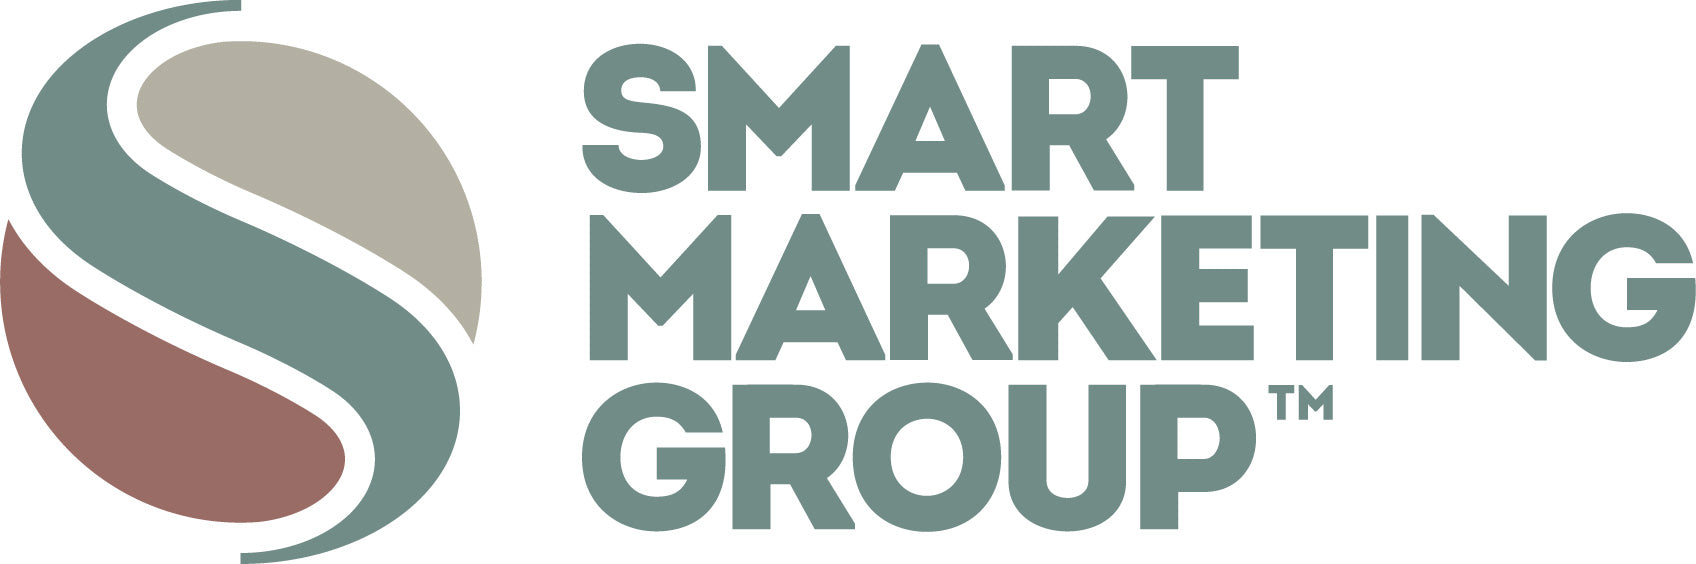 Smart Marketing Group